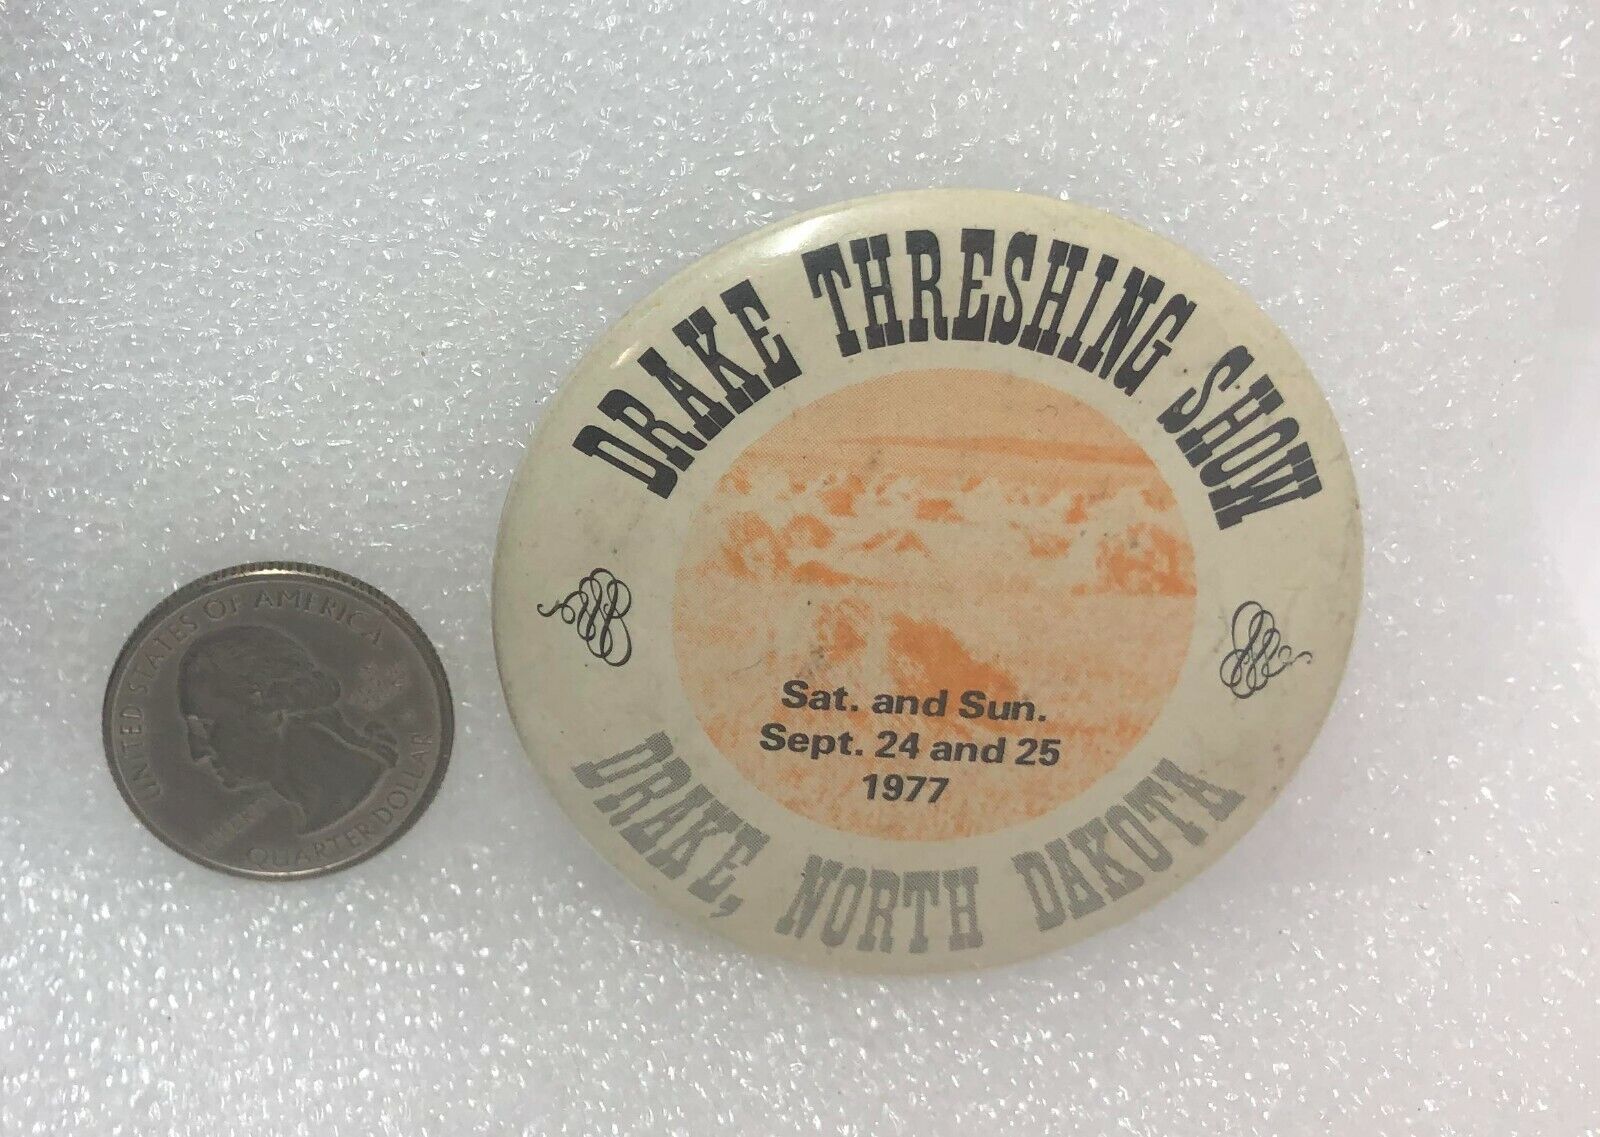 1977 Drake North Dakota Threshing Show Button Pin